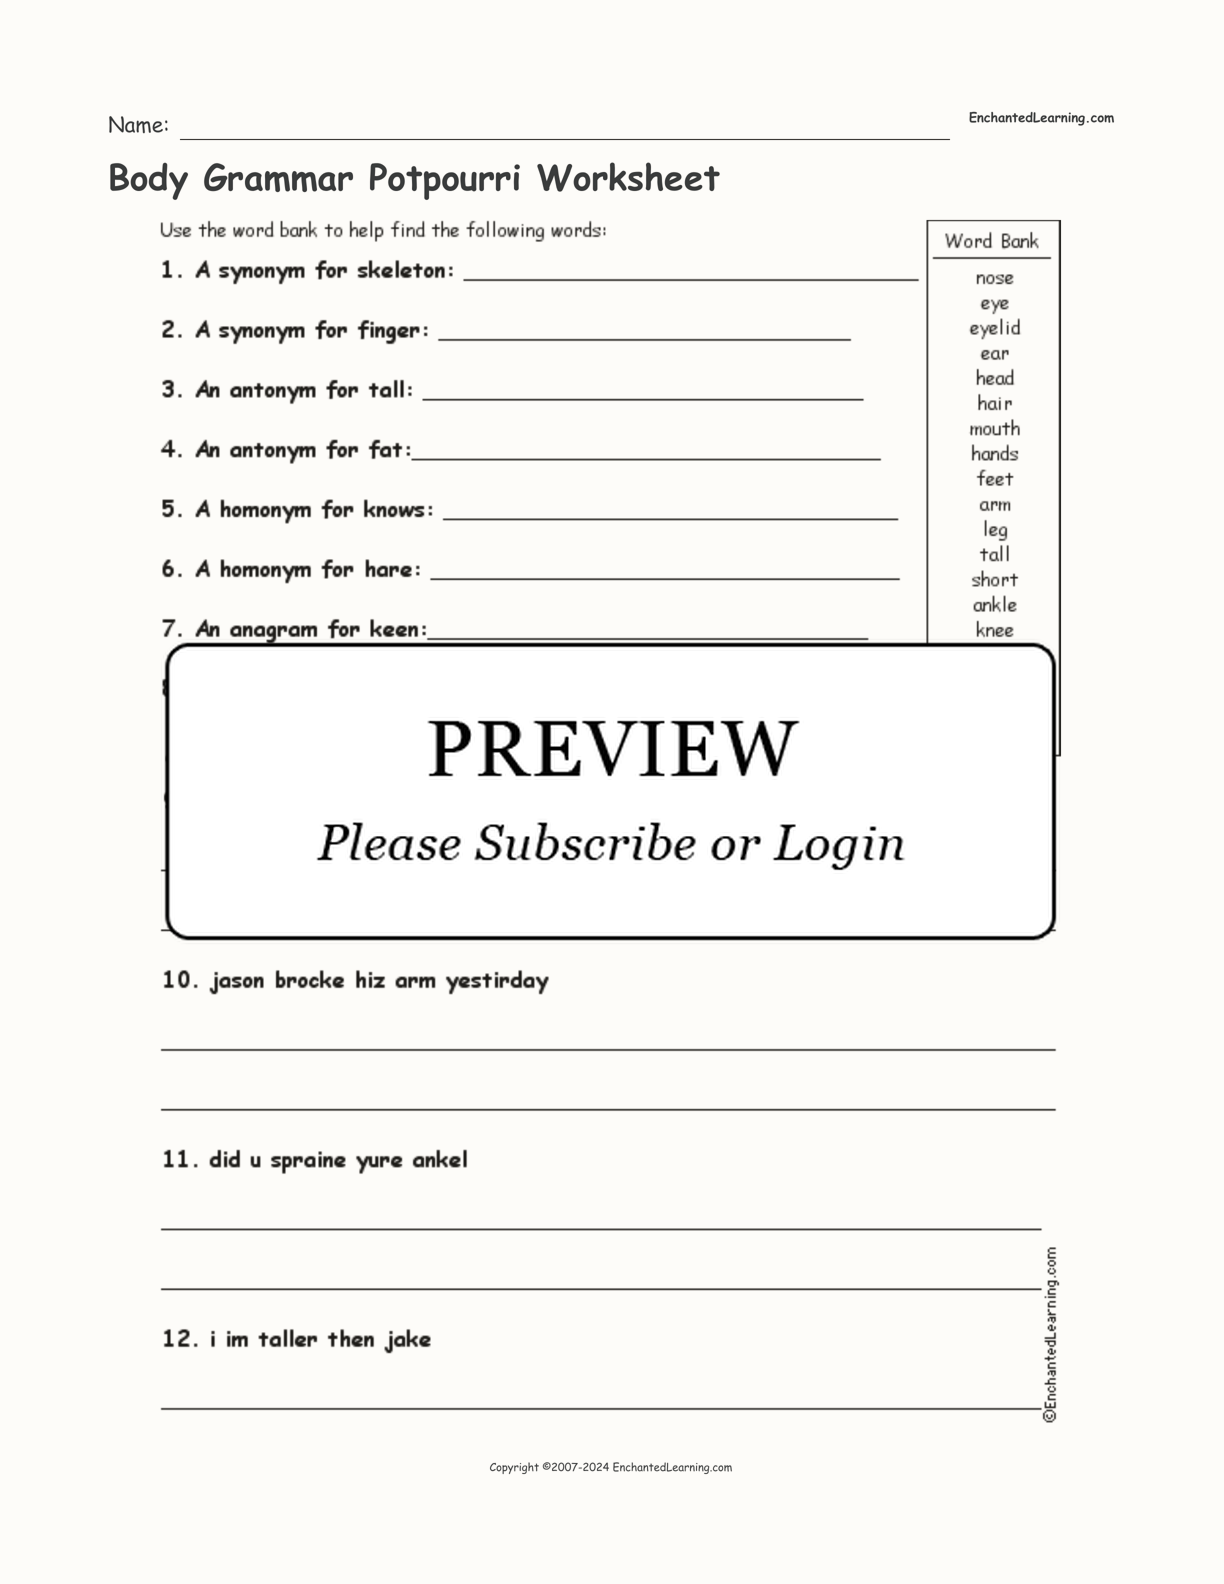 Body Grammar Potpourri Worksheet interactive worksheet page 1